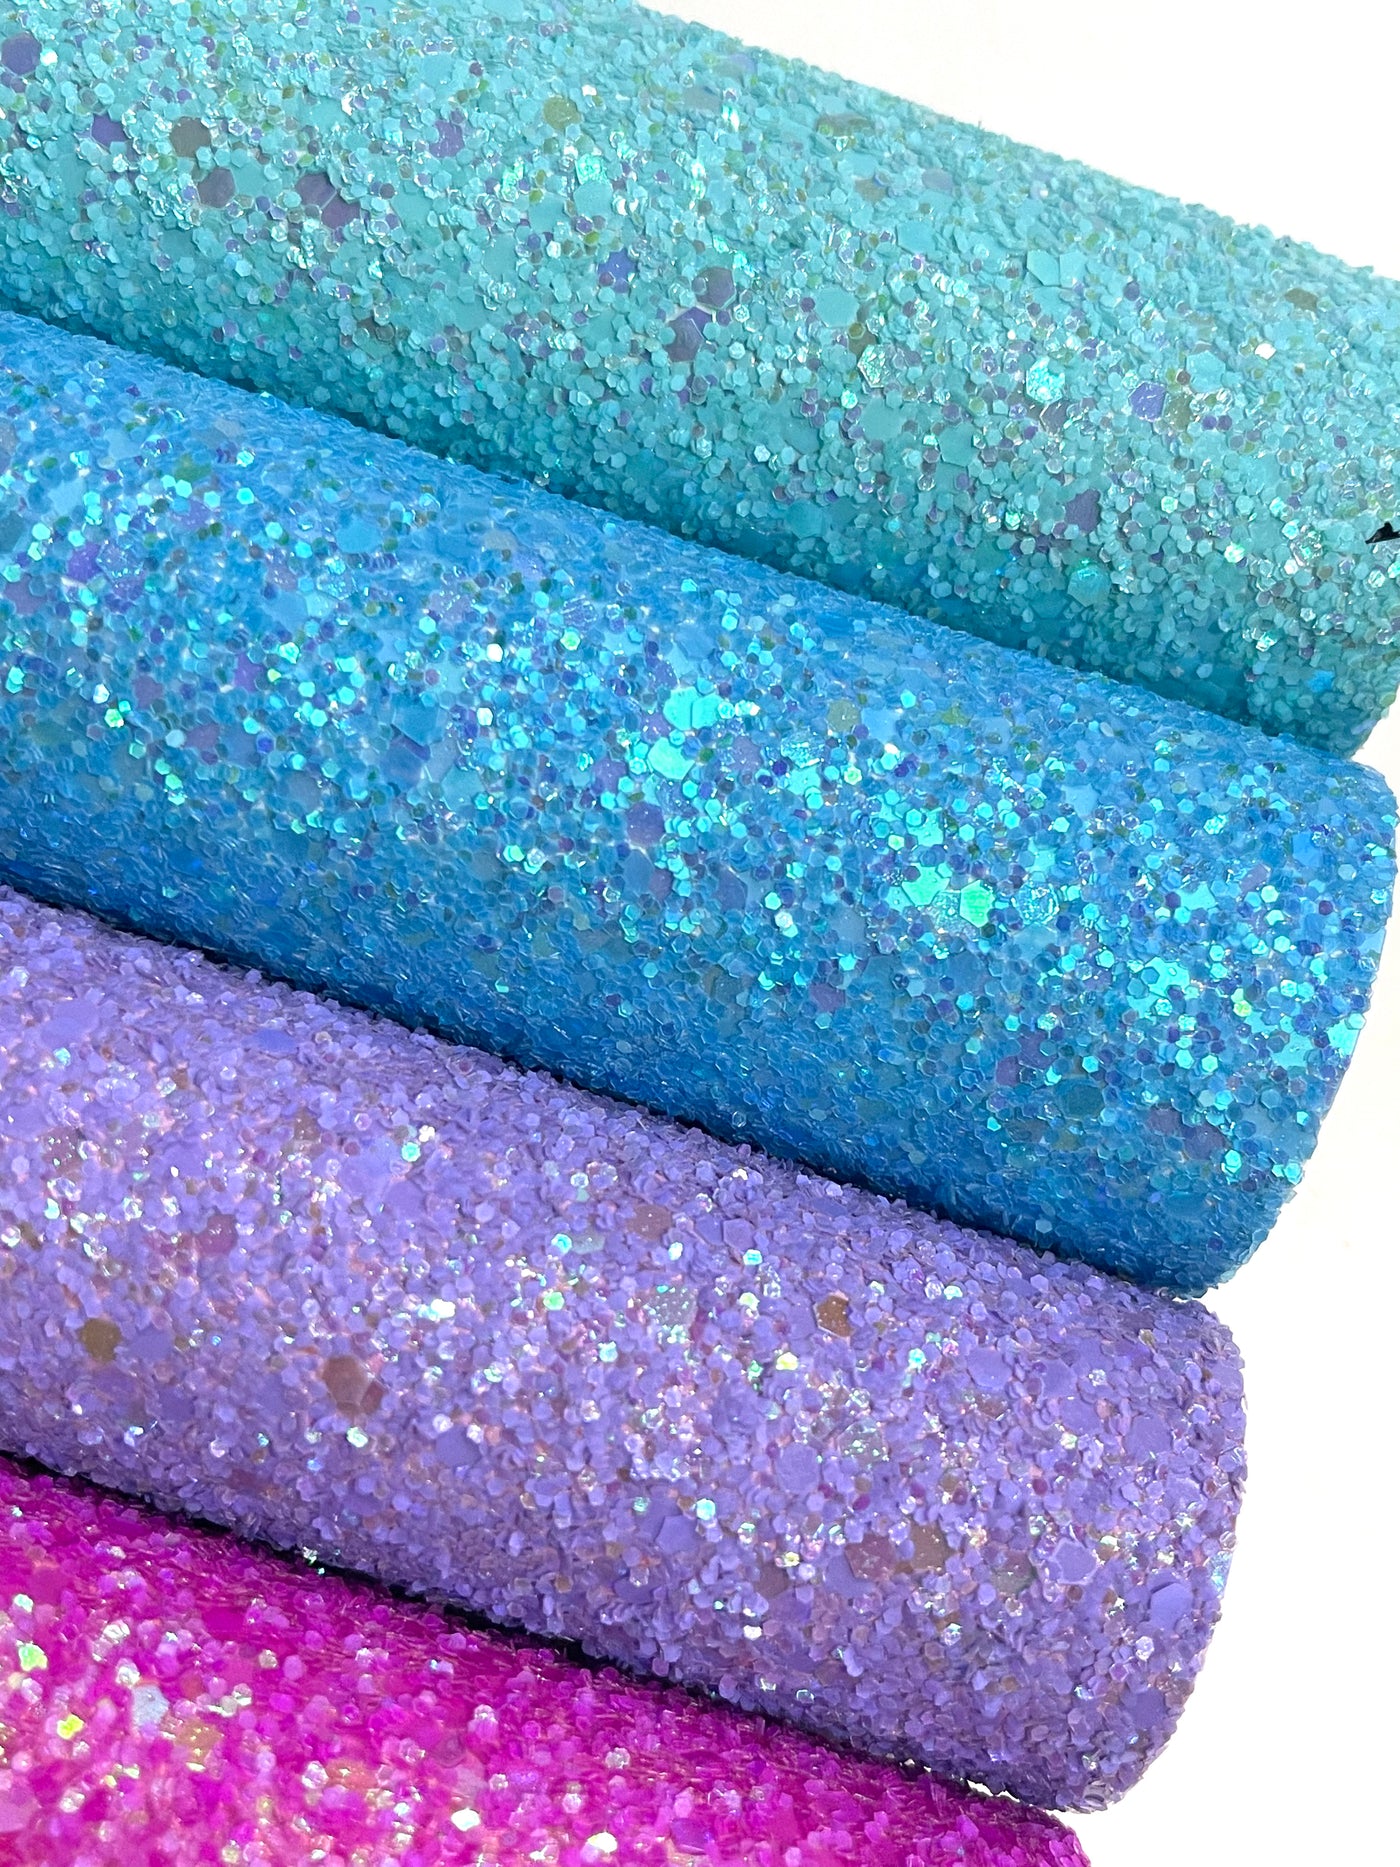 Violet Chunky Glitter Leather - Neon Rainbow